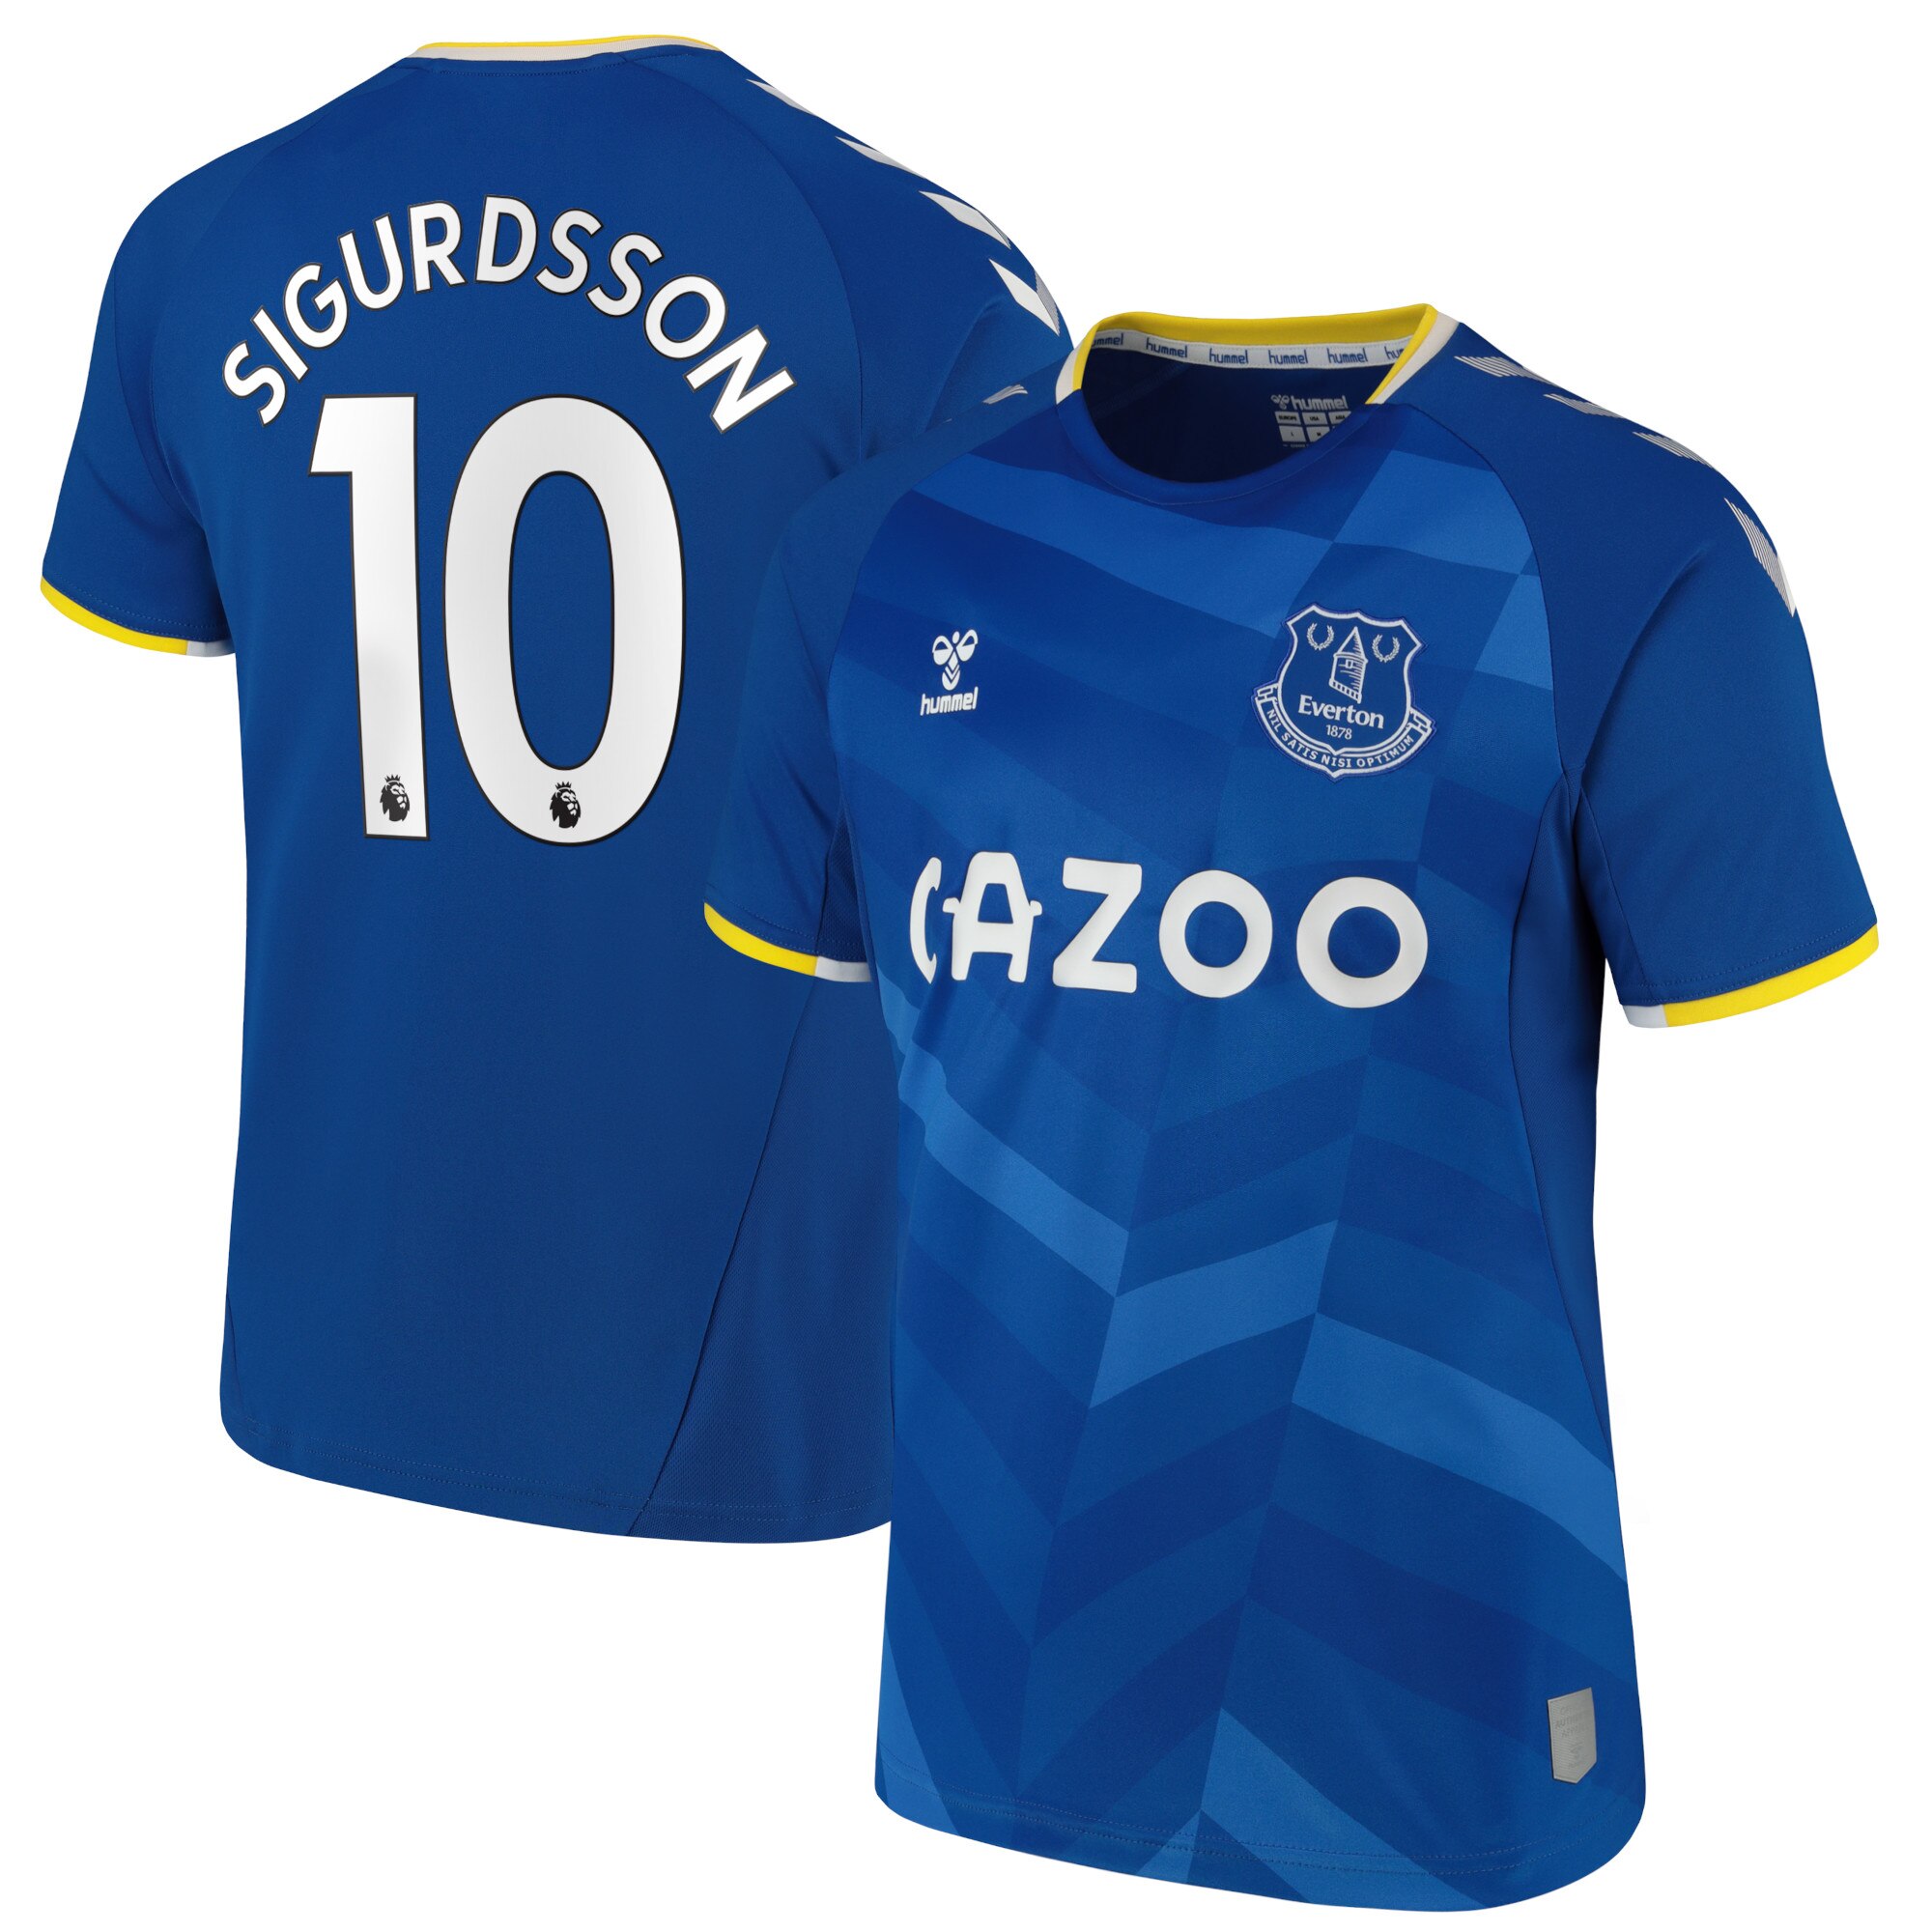 Everton Home Shirt - 2021-22 with Sigurdsson 10 printing